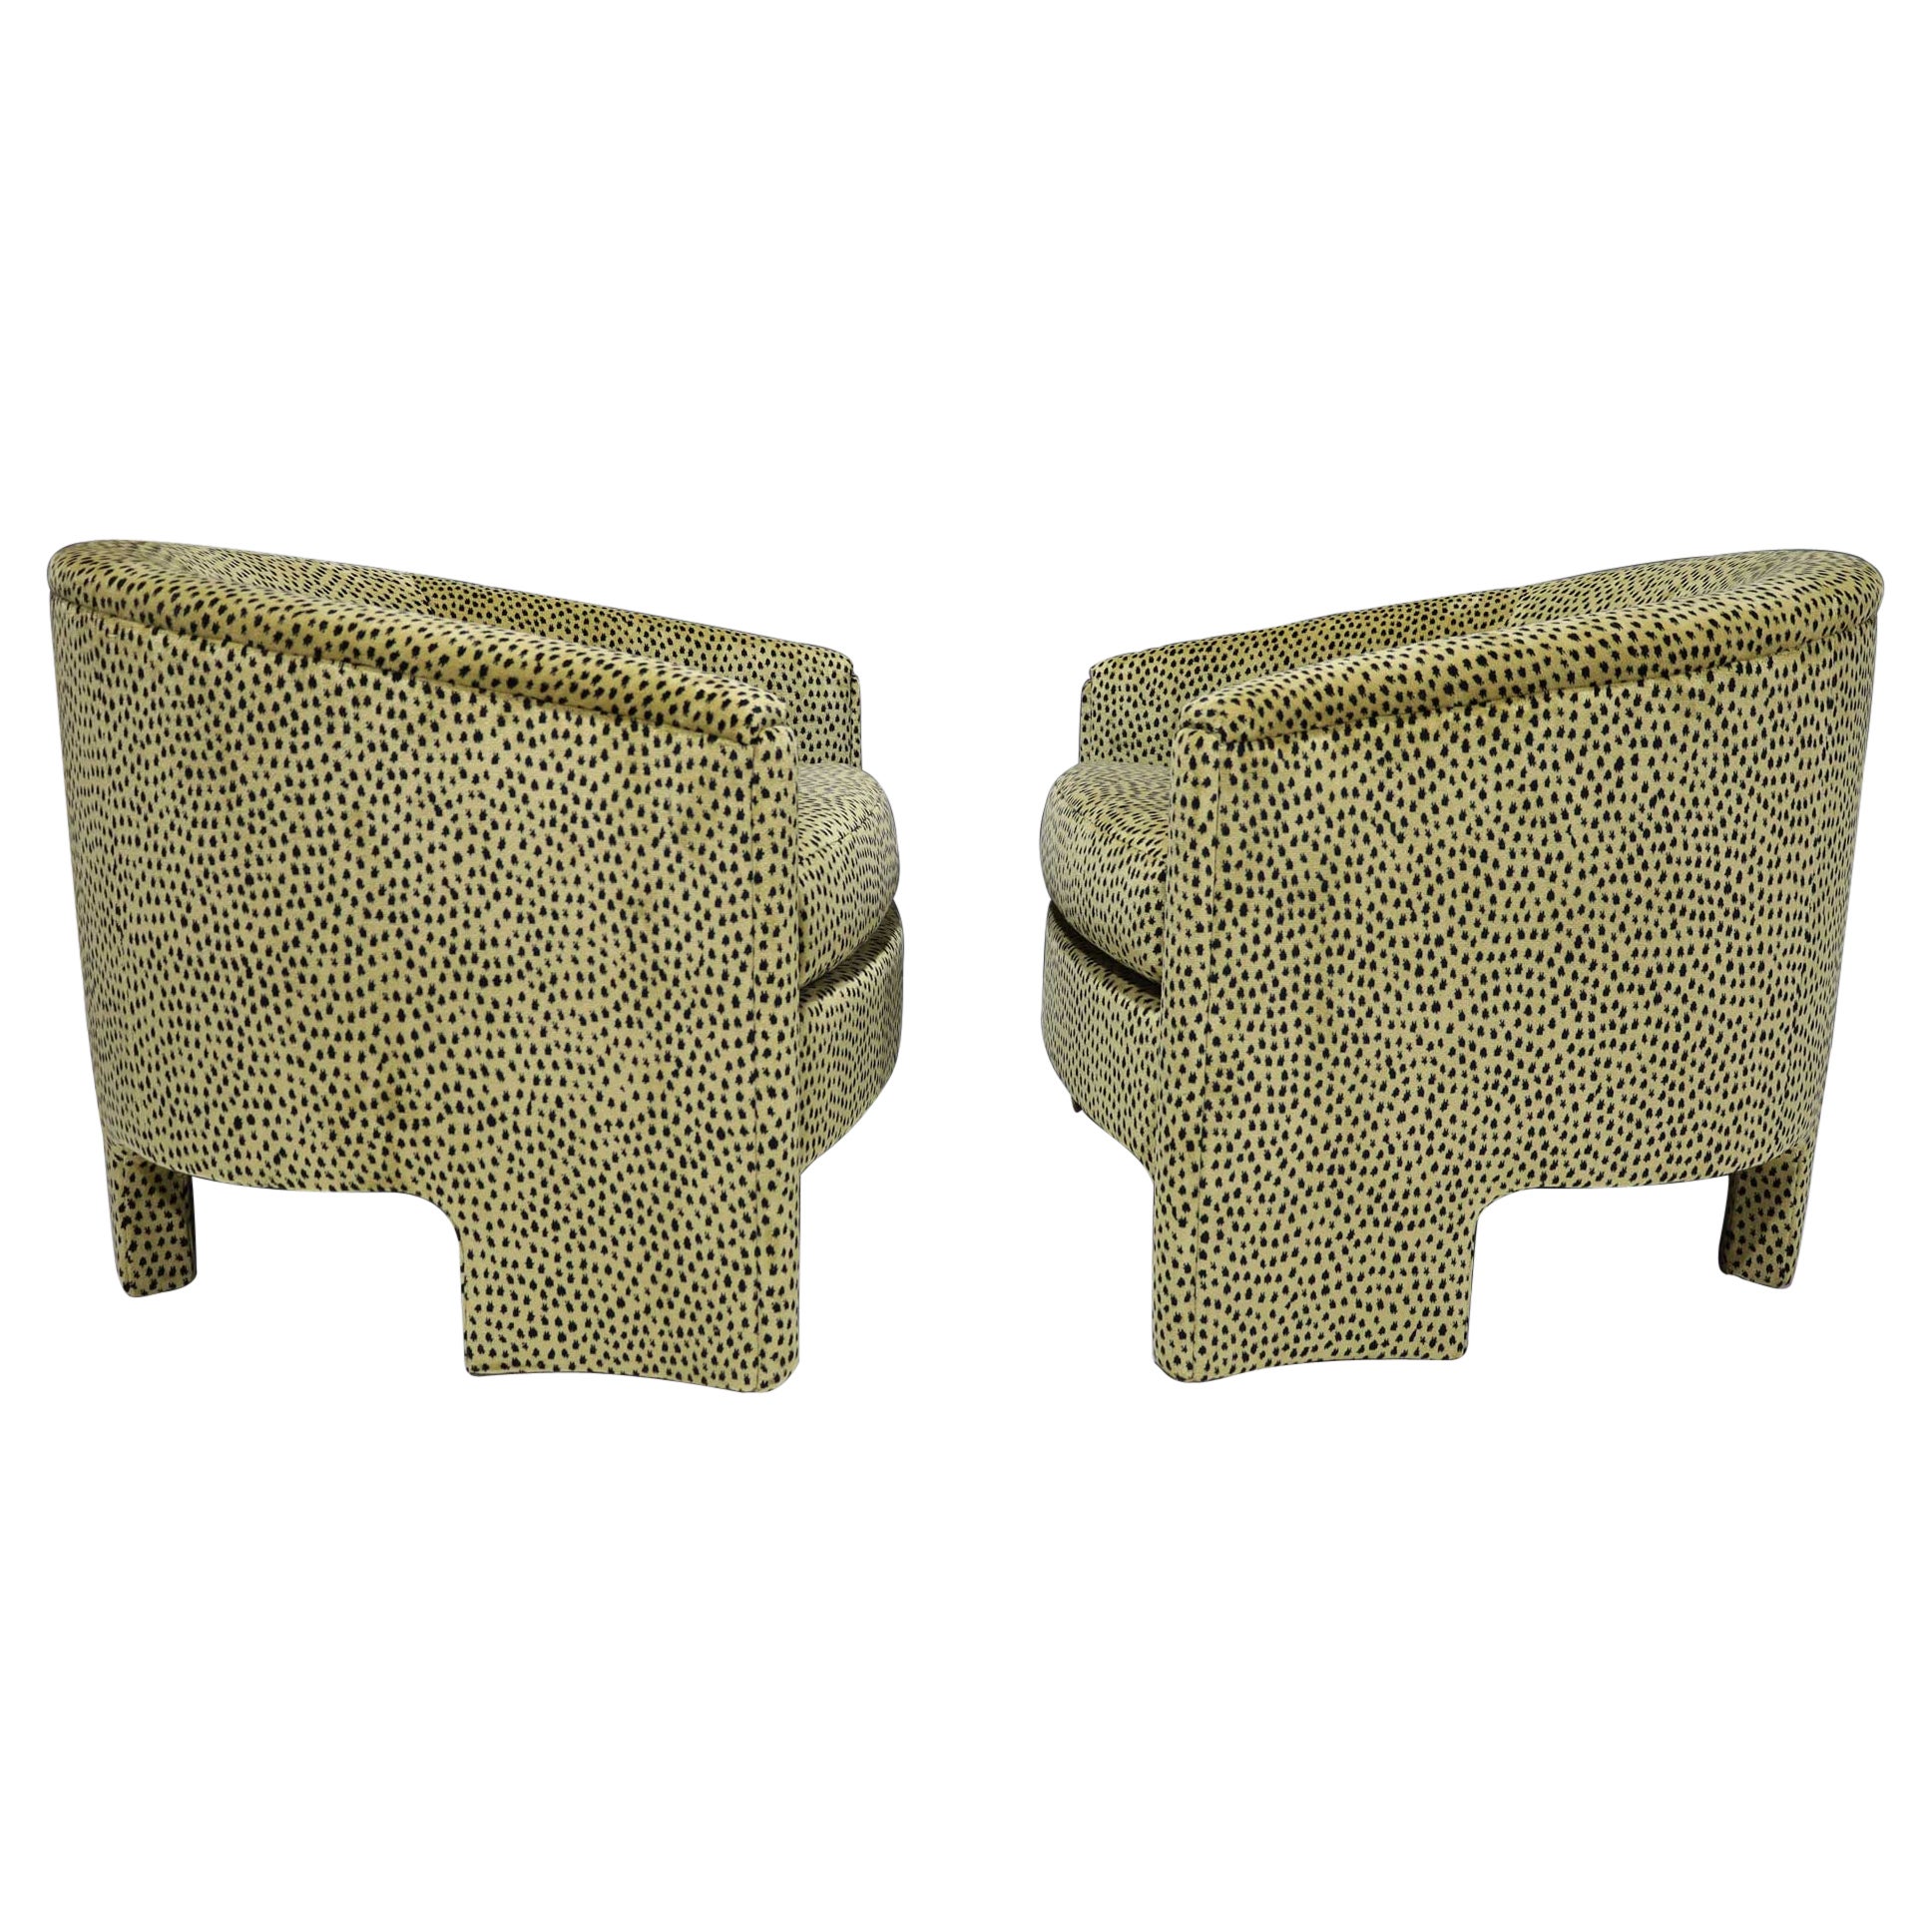 Pair of Mid Century Modern Tub Chairs in Cheetah Print Velvet For Sale